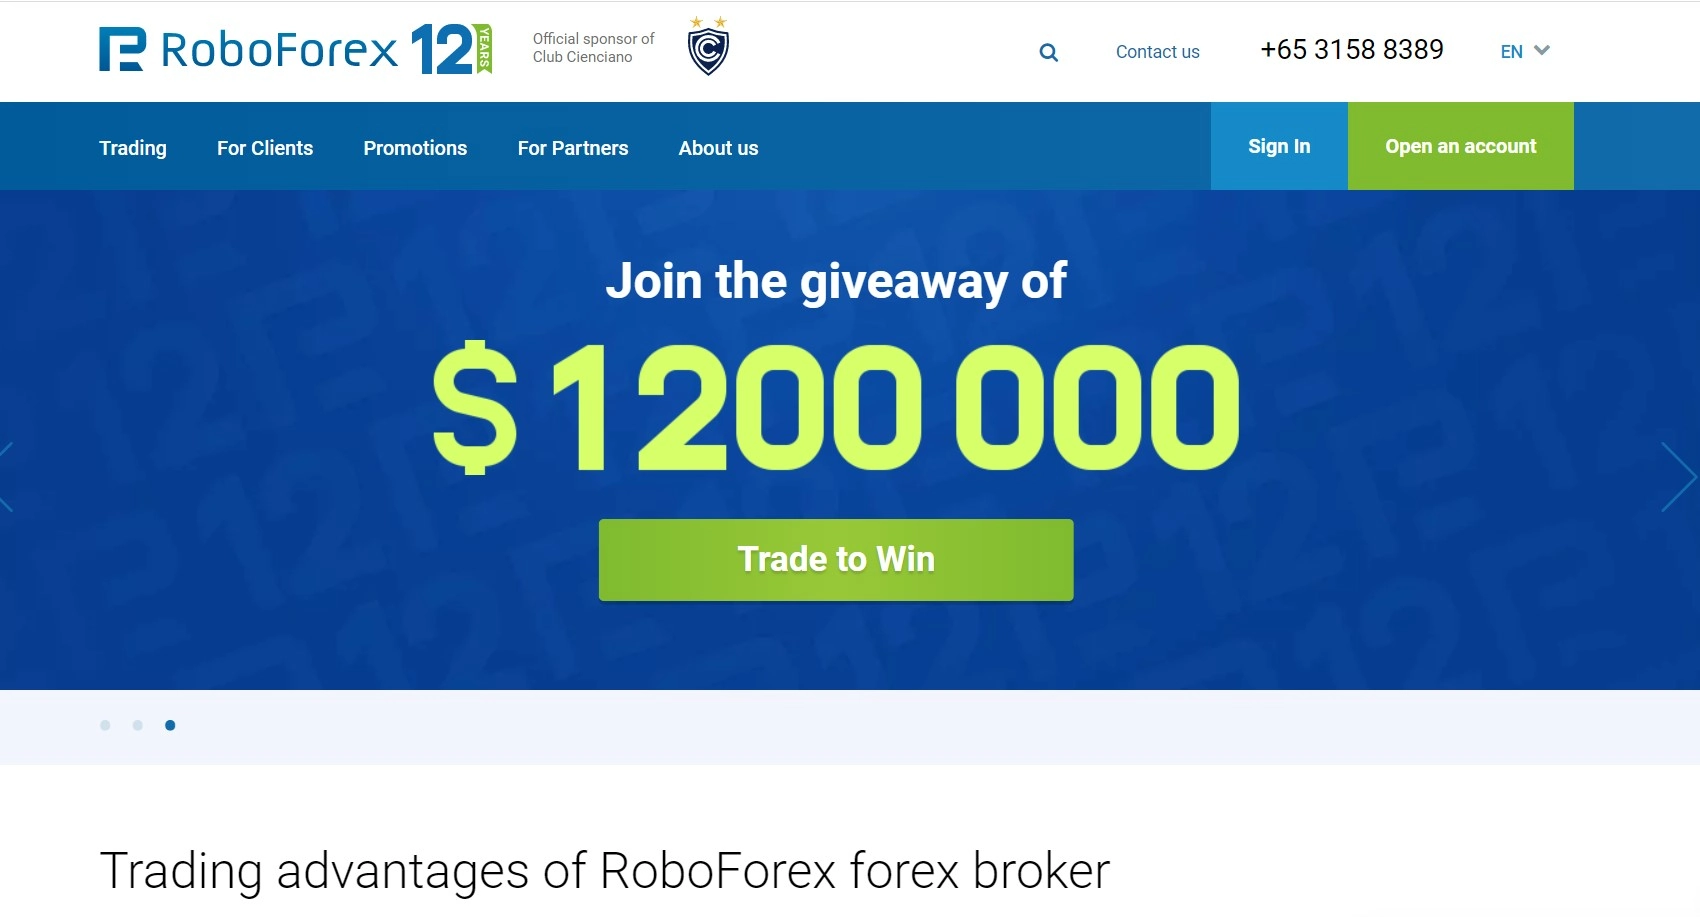 The official website of RoboForex